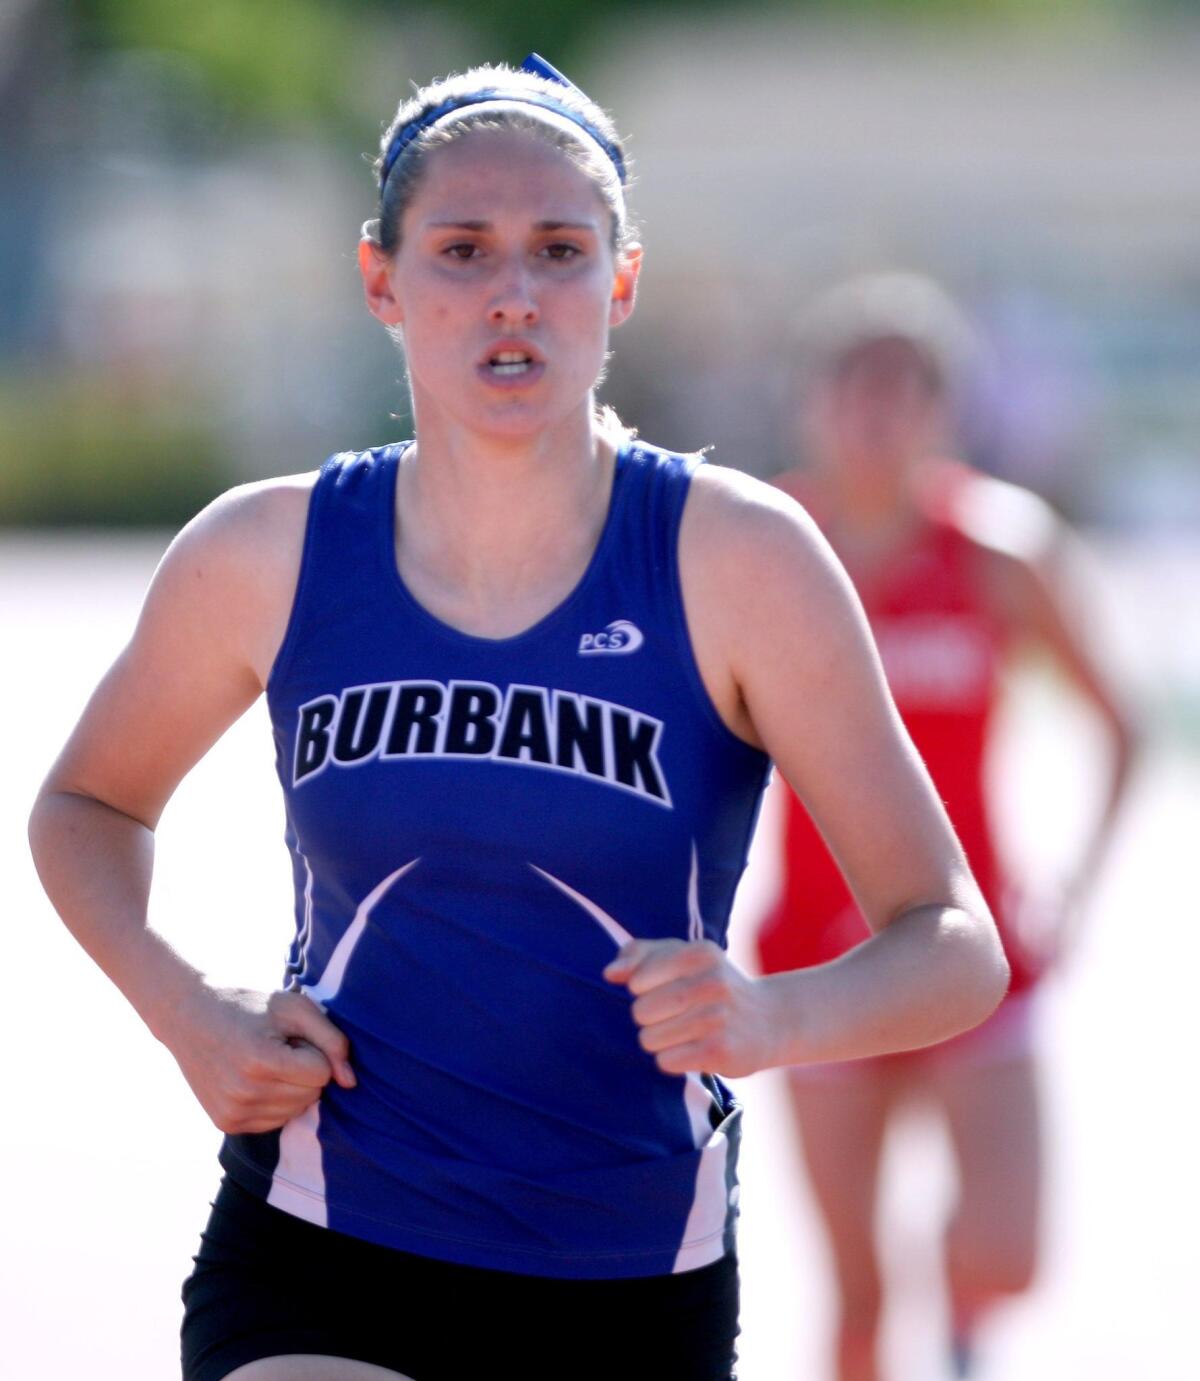 Burbank High School's Kira Bochard wins the 400-meter race vs. Burroughs High School at Burroughs in Pacific League track meet, in Burbank on Wednesday, April 20, 2016.